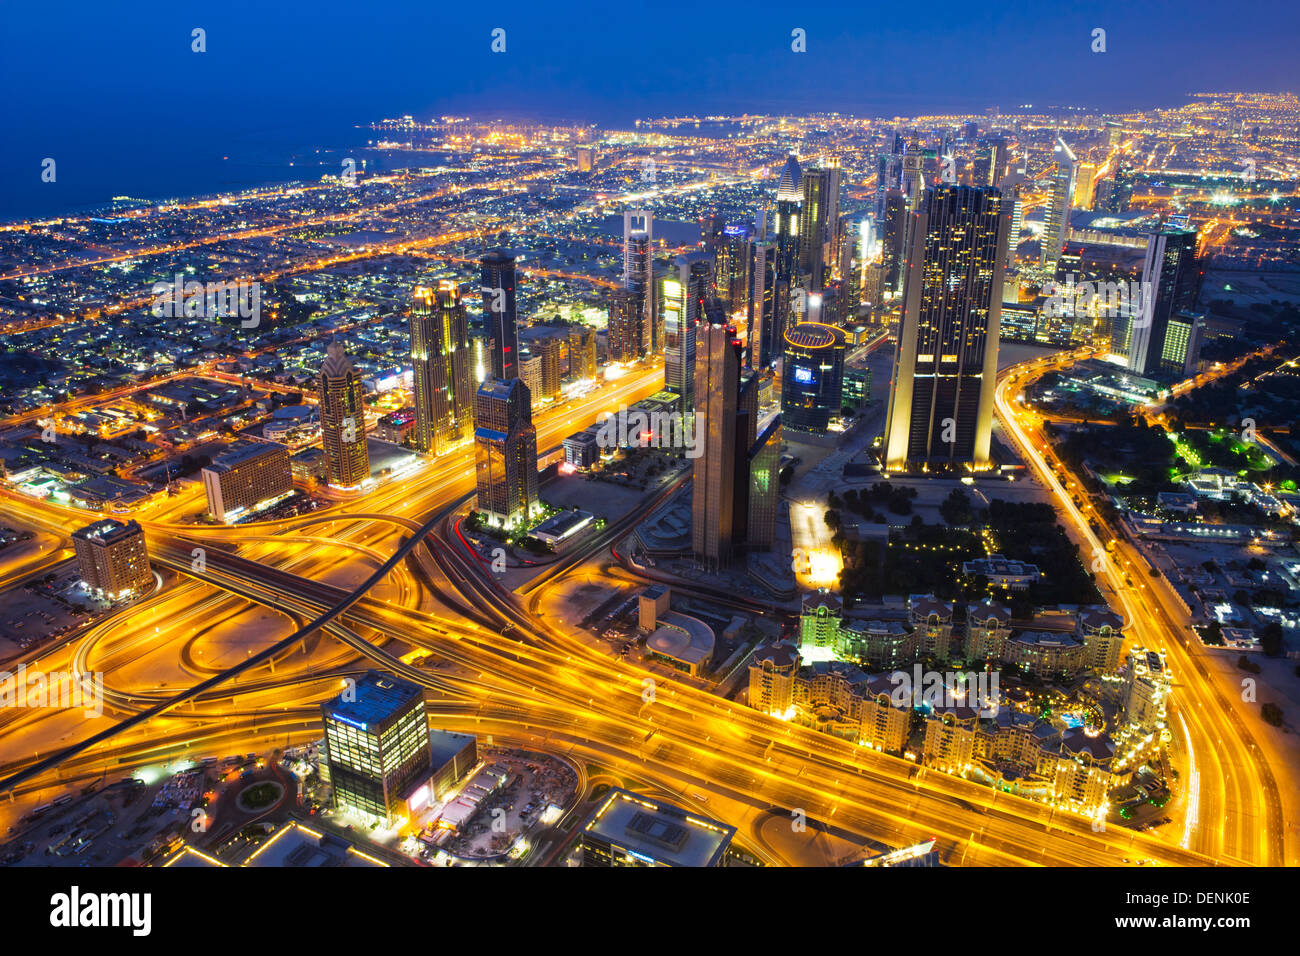 Dubai Financial centre at dusk viewed from the top of Burj Khalifa in Dubai, UAE. Stock Photo